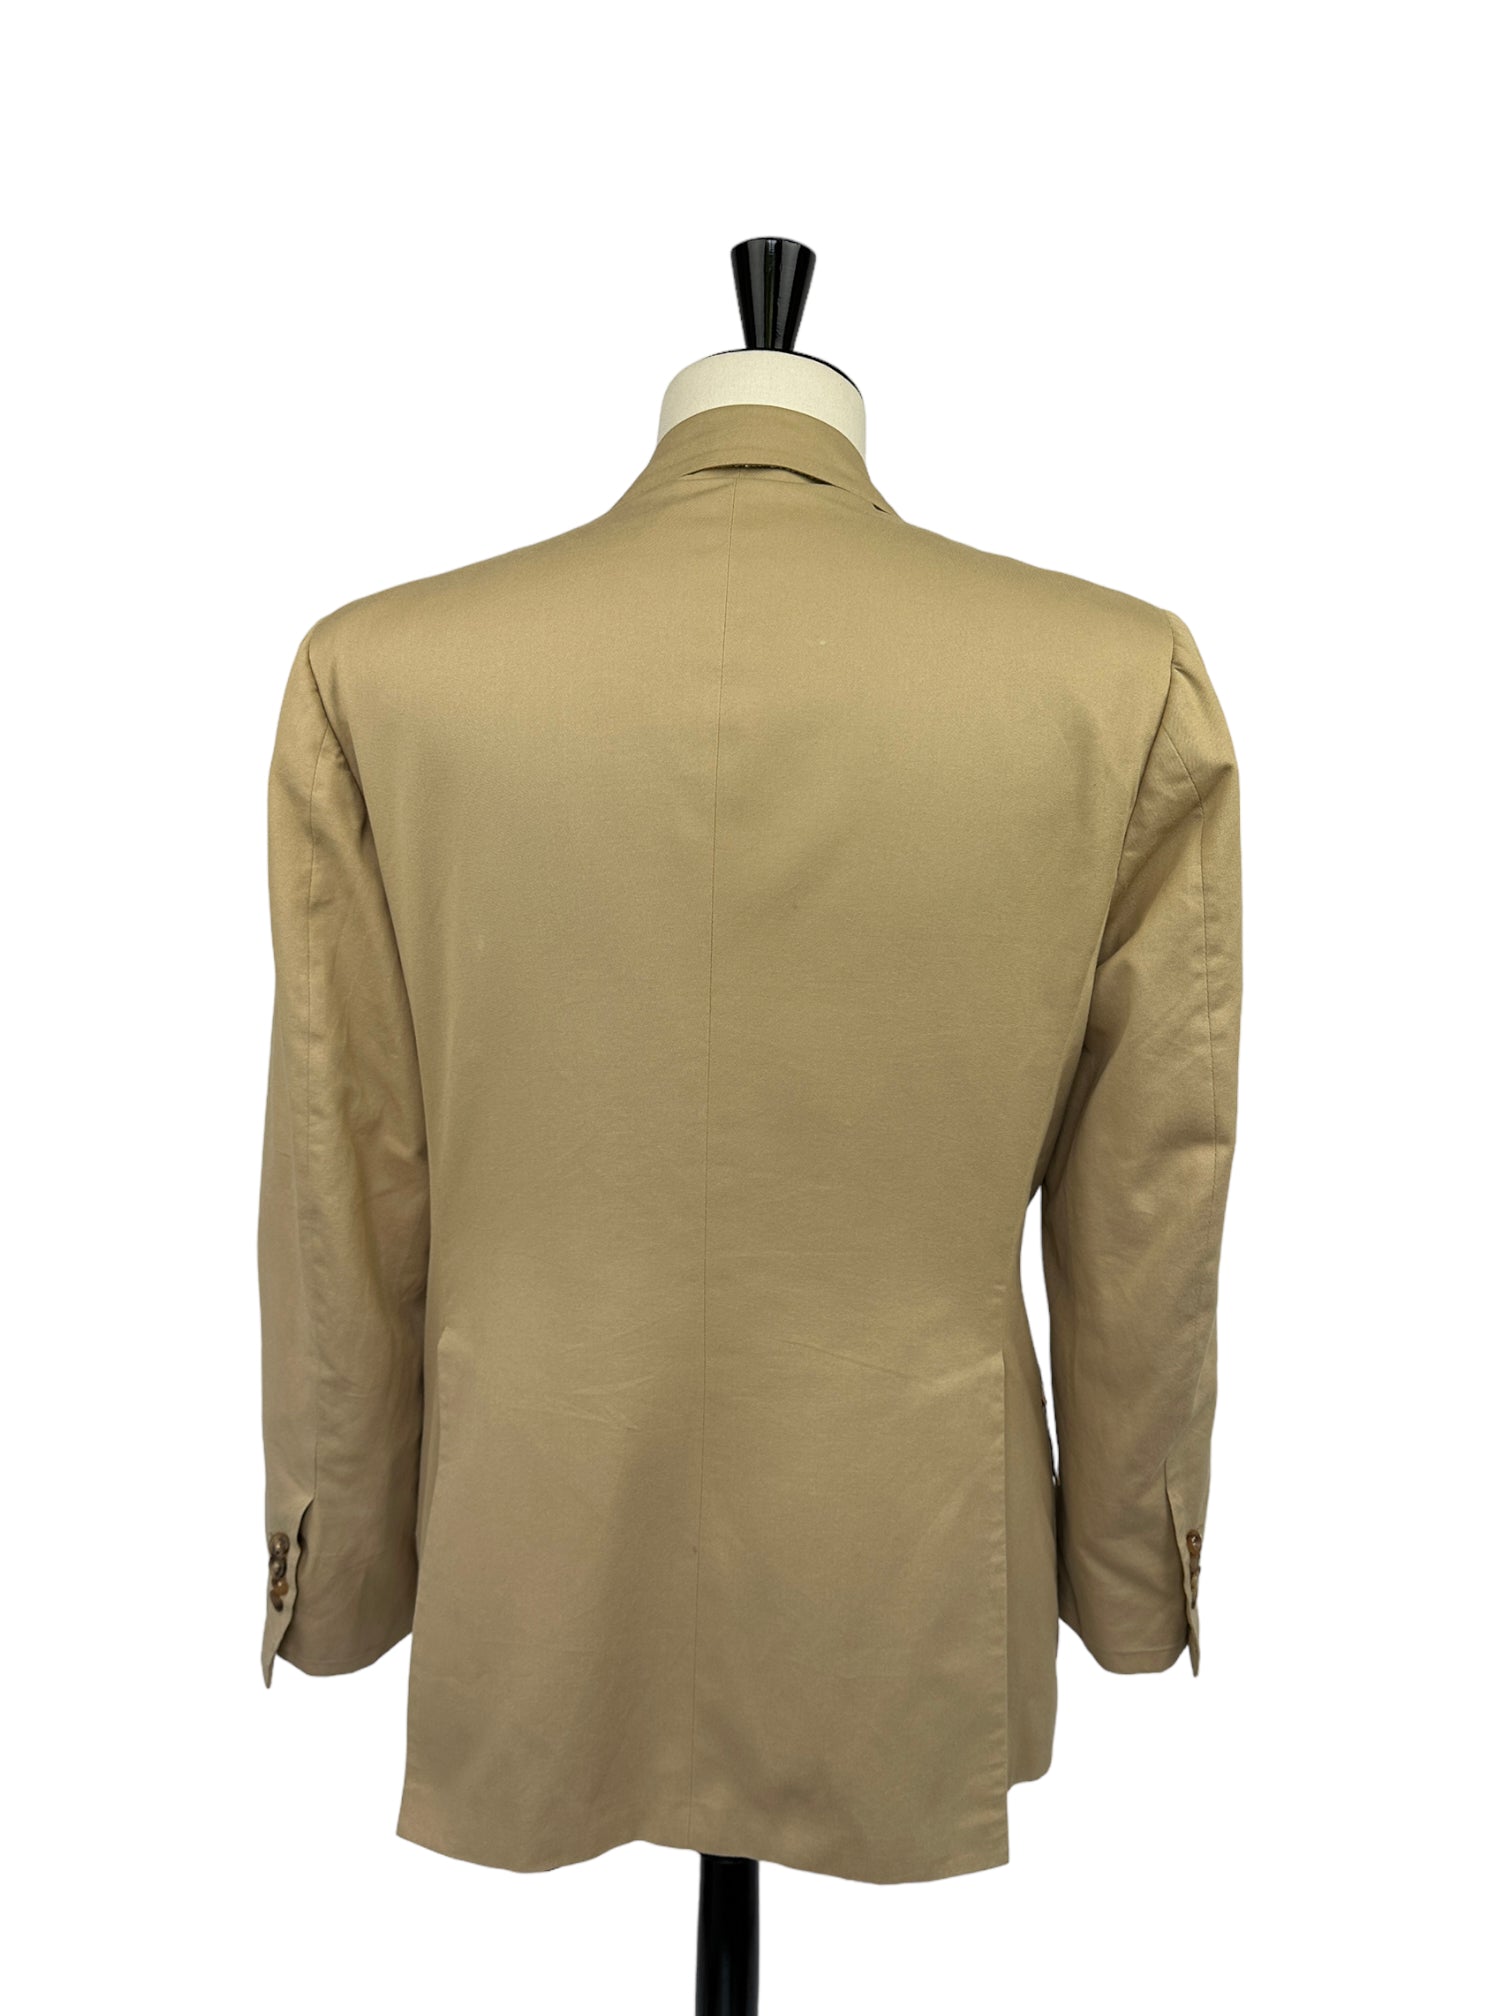 Kiton Beige Safari Style Cotton Jacket